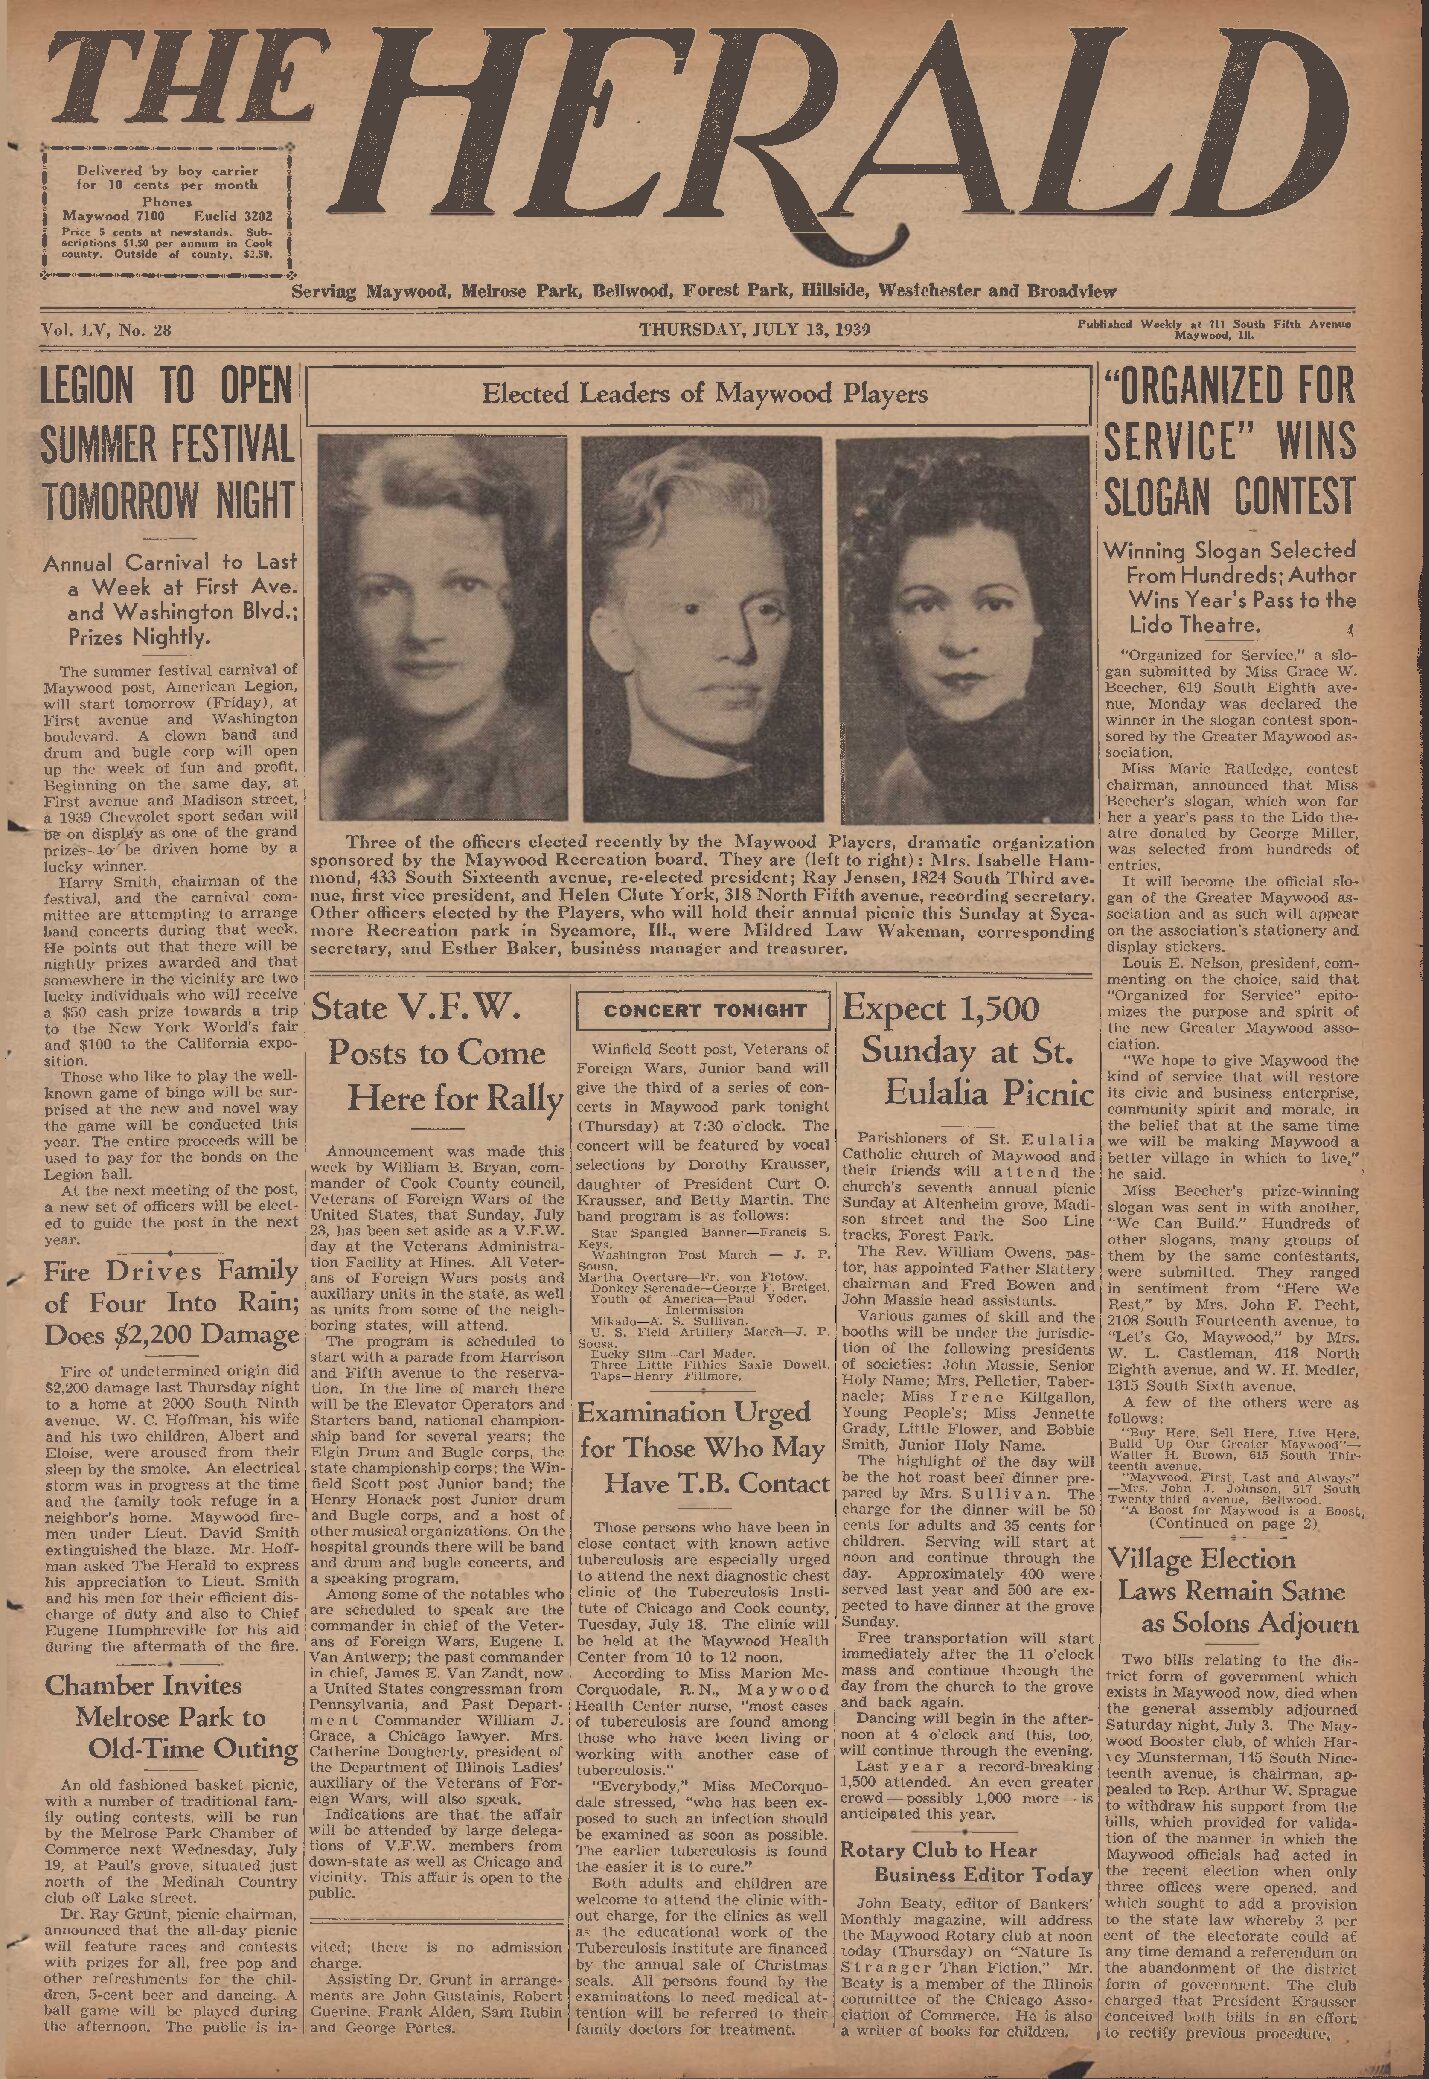 The Herald – 19390713